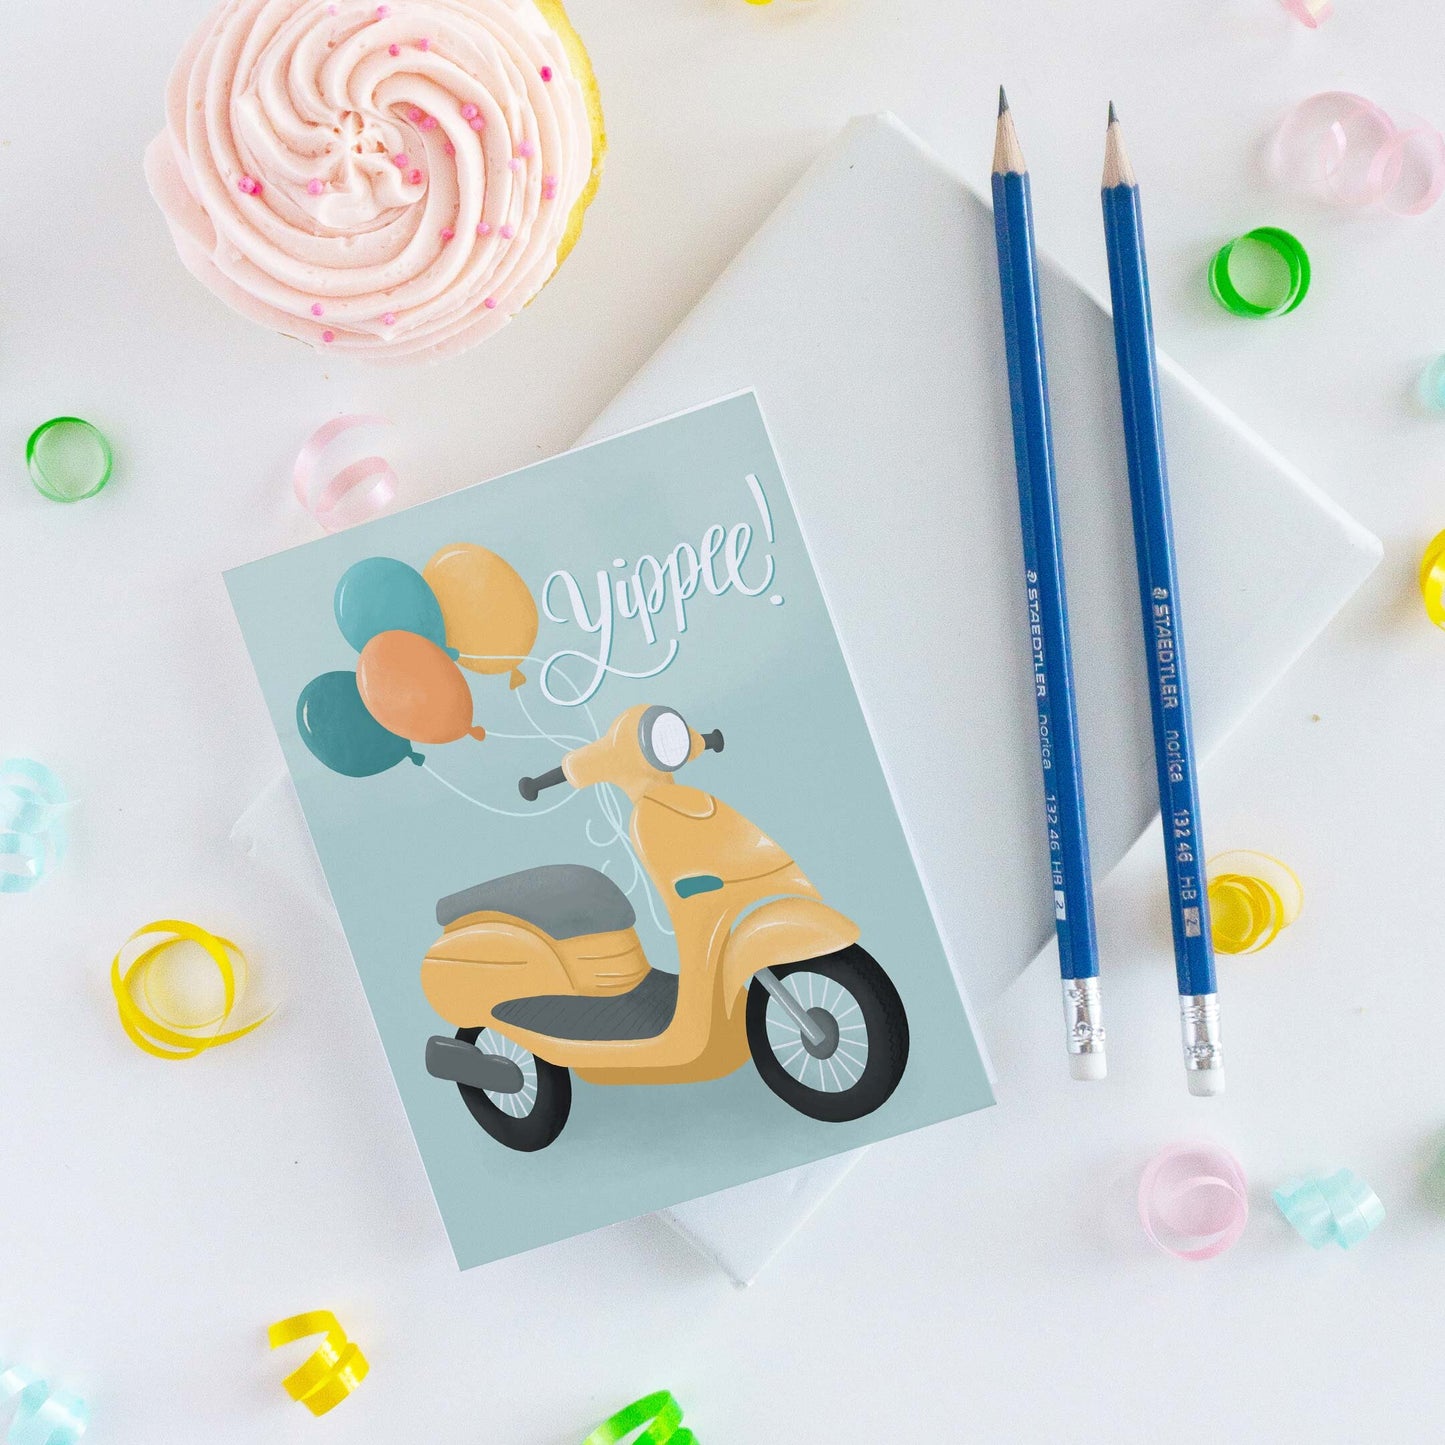 Yippee! Moped Birthday Card